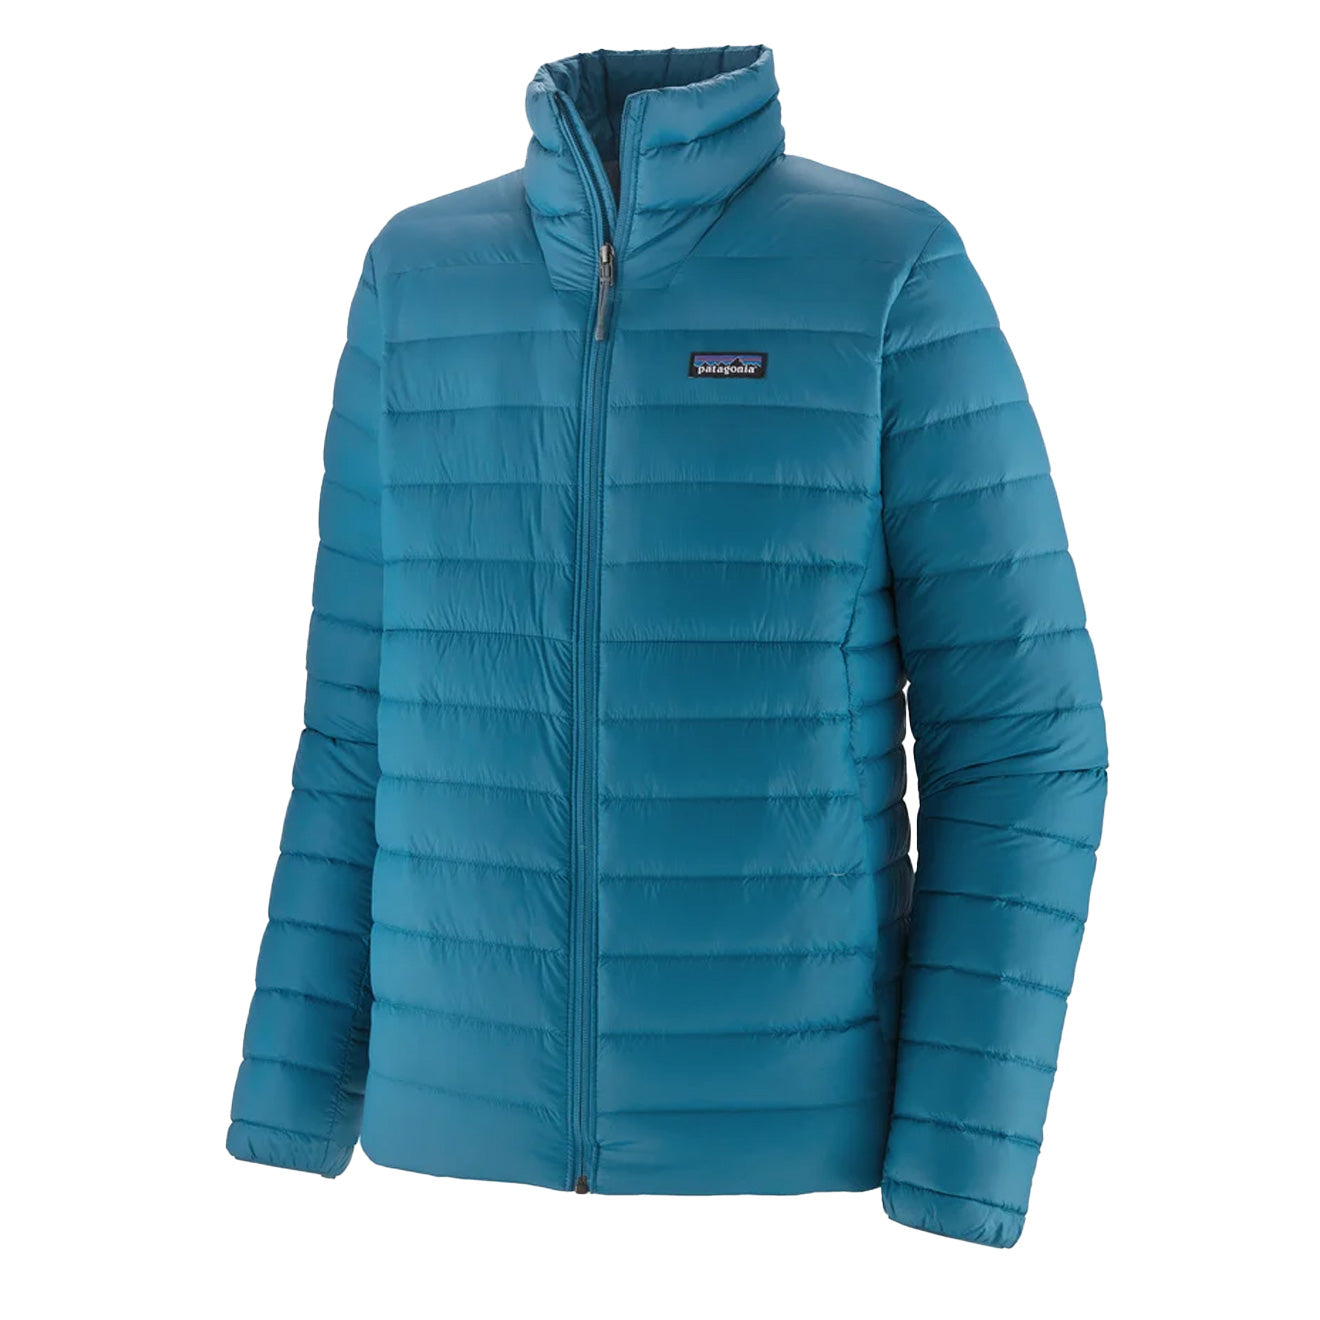 Patagonia Down Sweater Jacket Wavy Blue | Yards Store Menswear